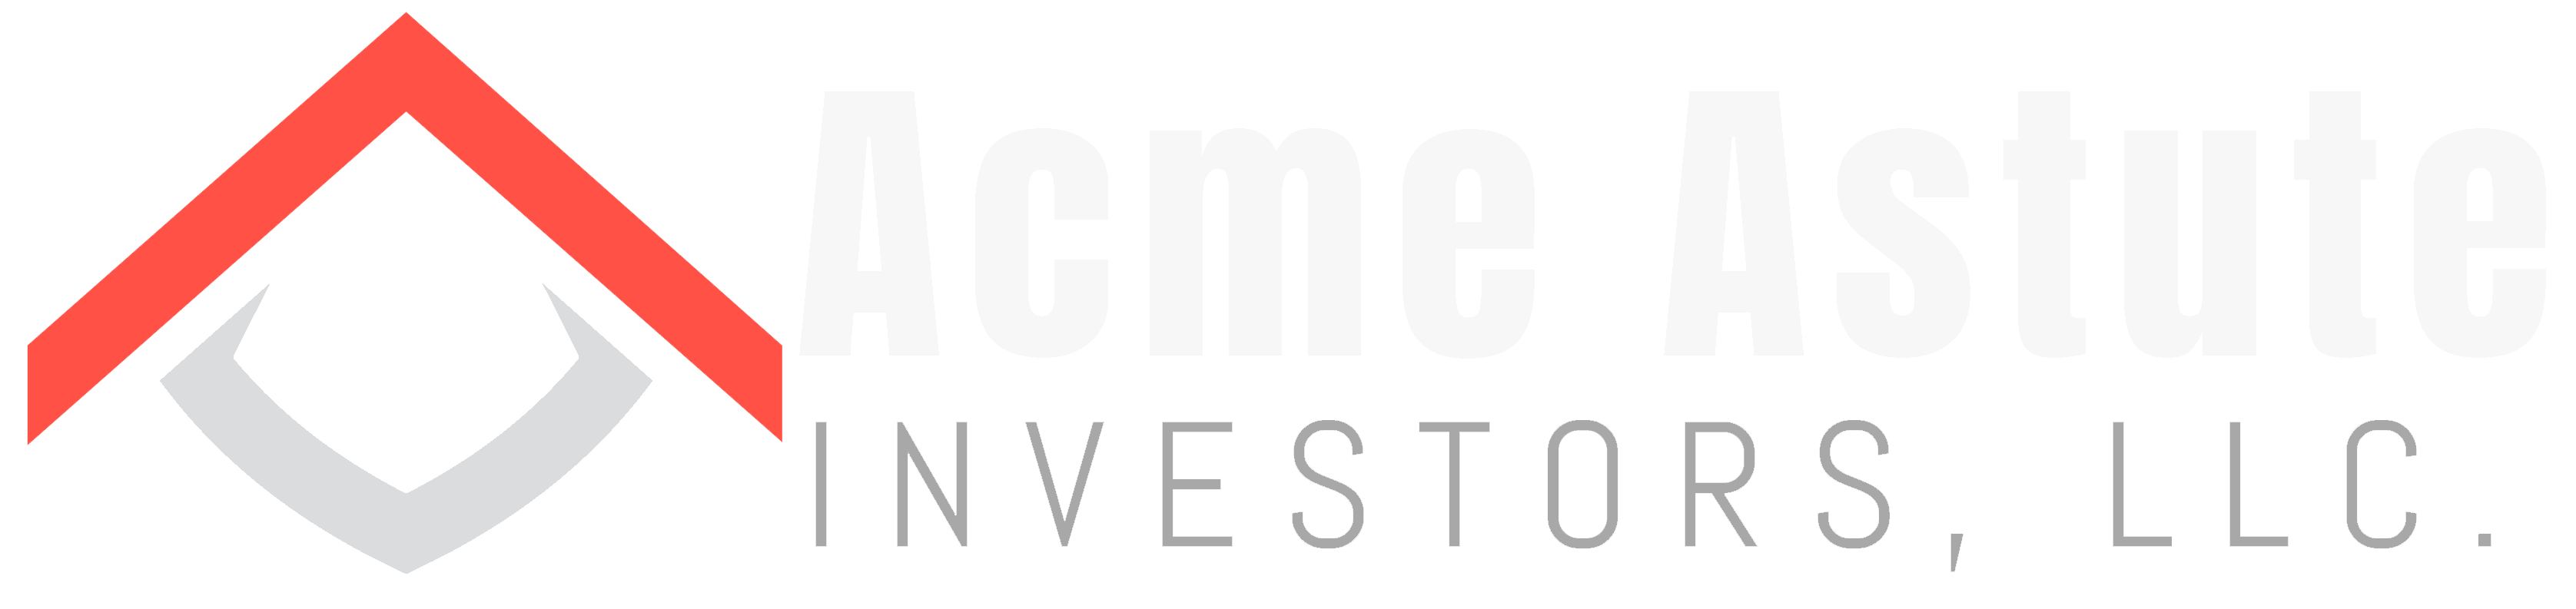 Acme Astute Investors LLCTestimonial